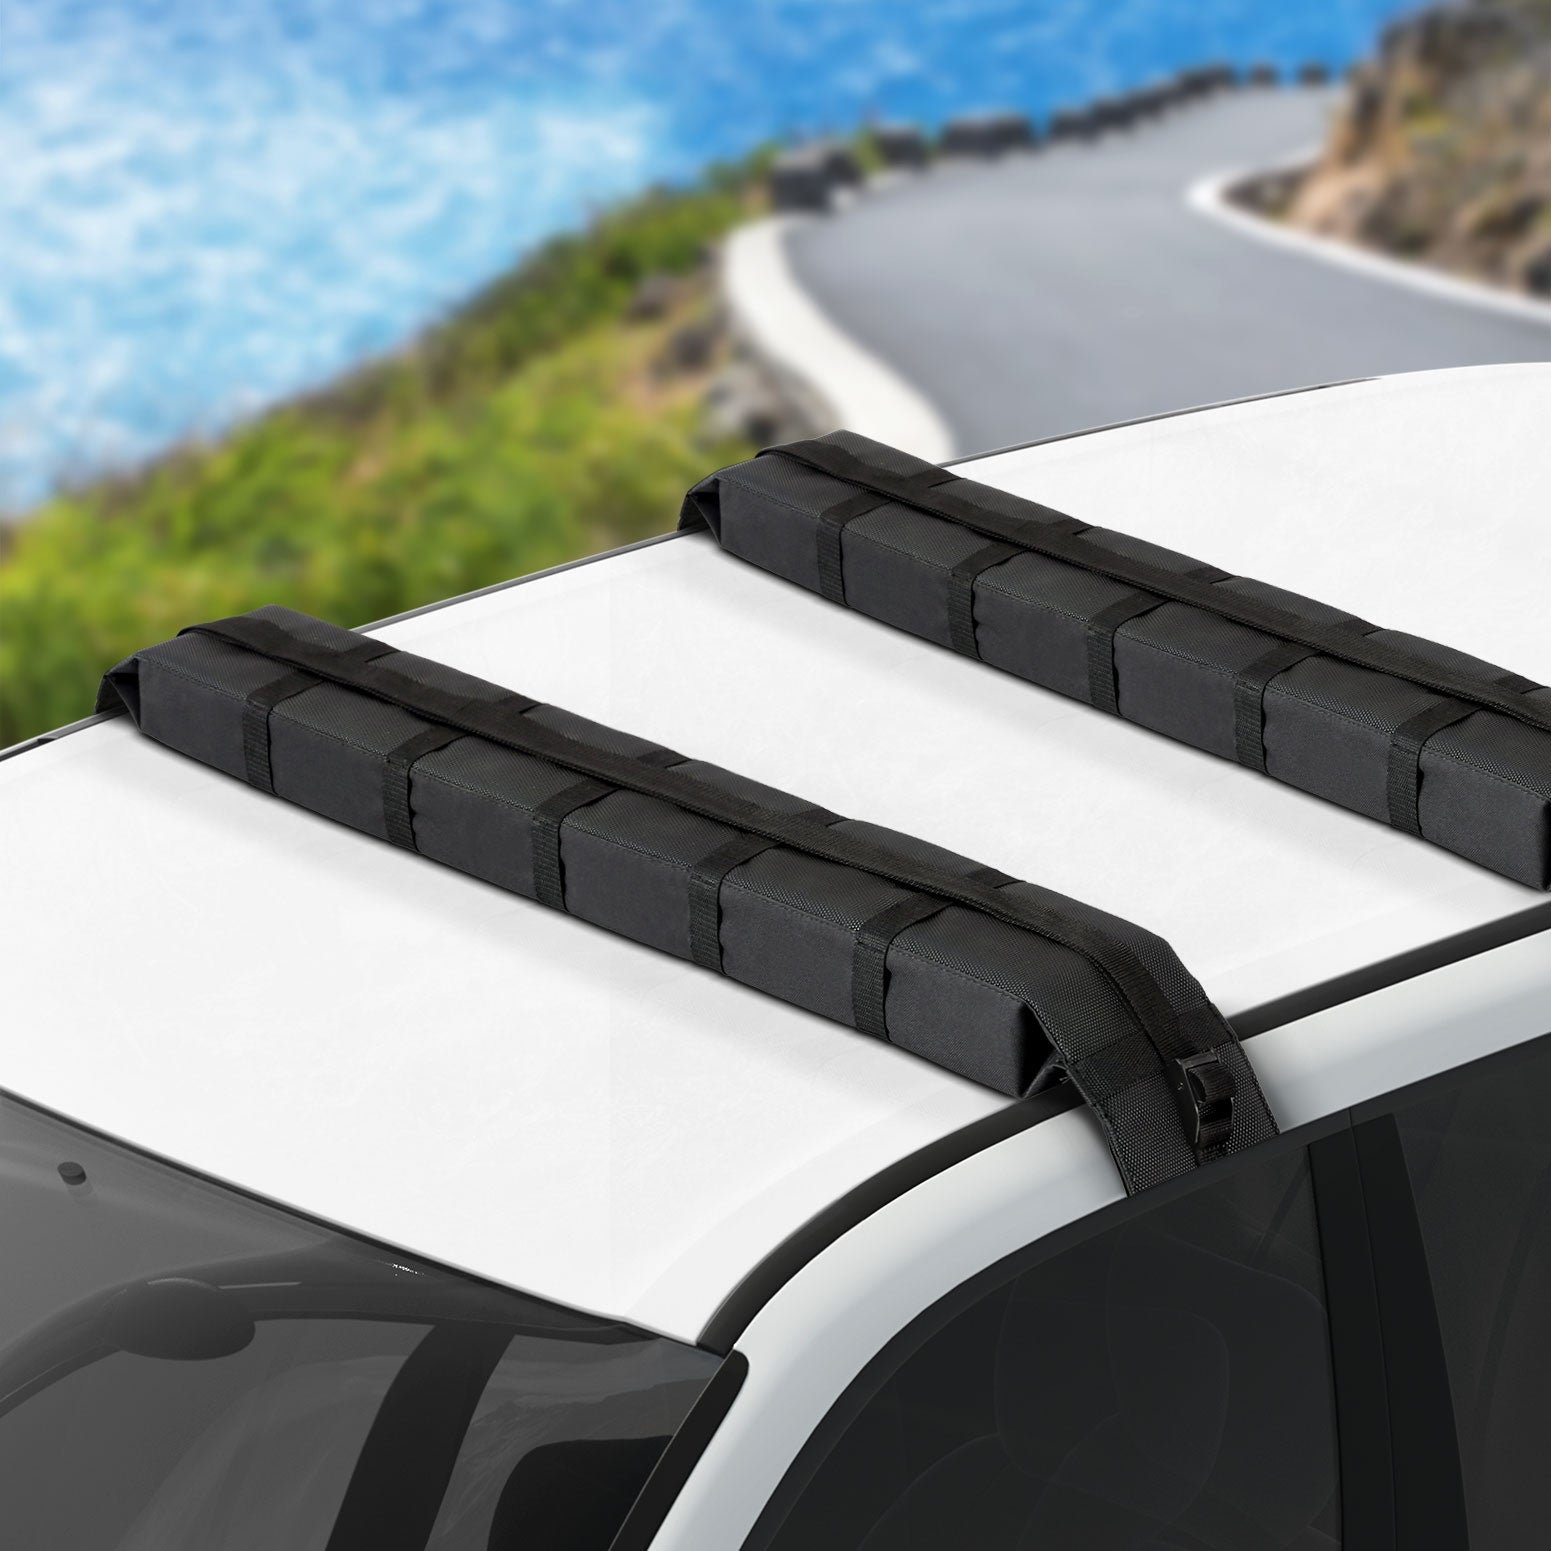 Universal Soft Car Roof Rack 116cm Kayak Luggage Carrier Adjustable Strap Black - SILBERSHELL